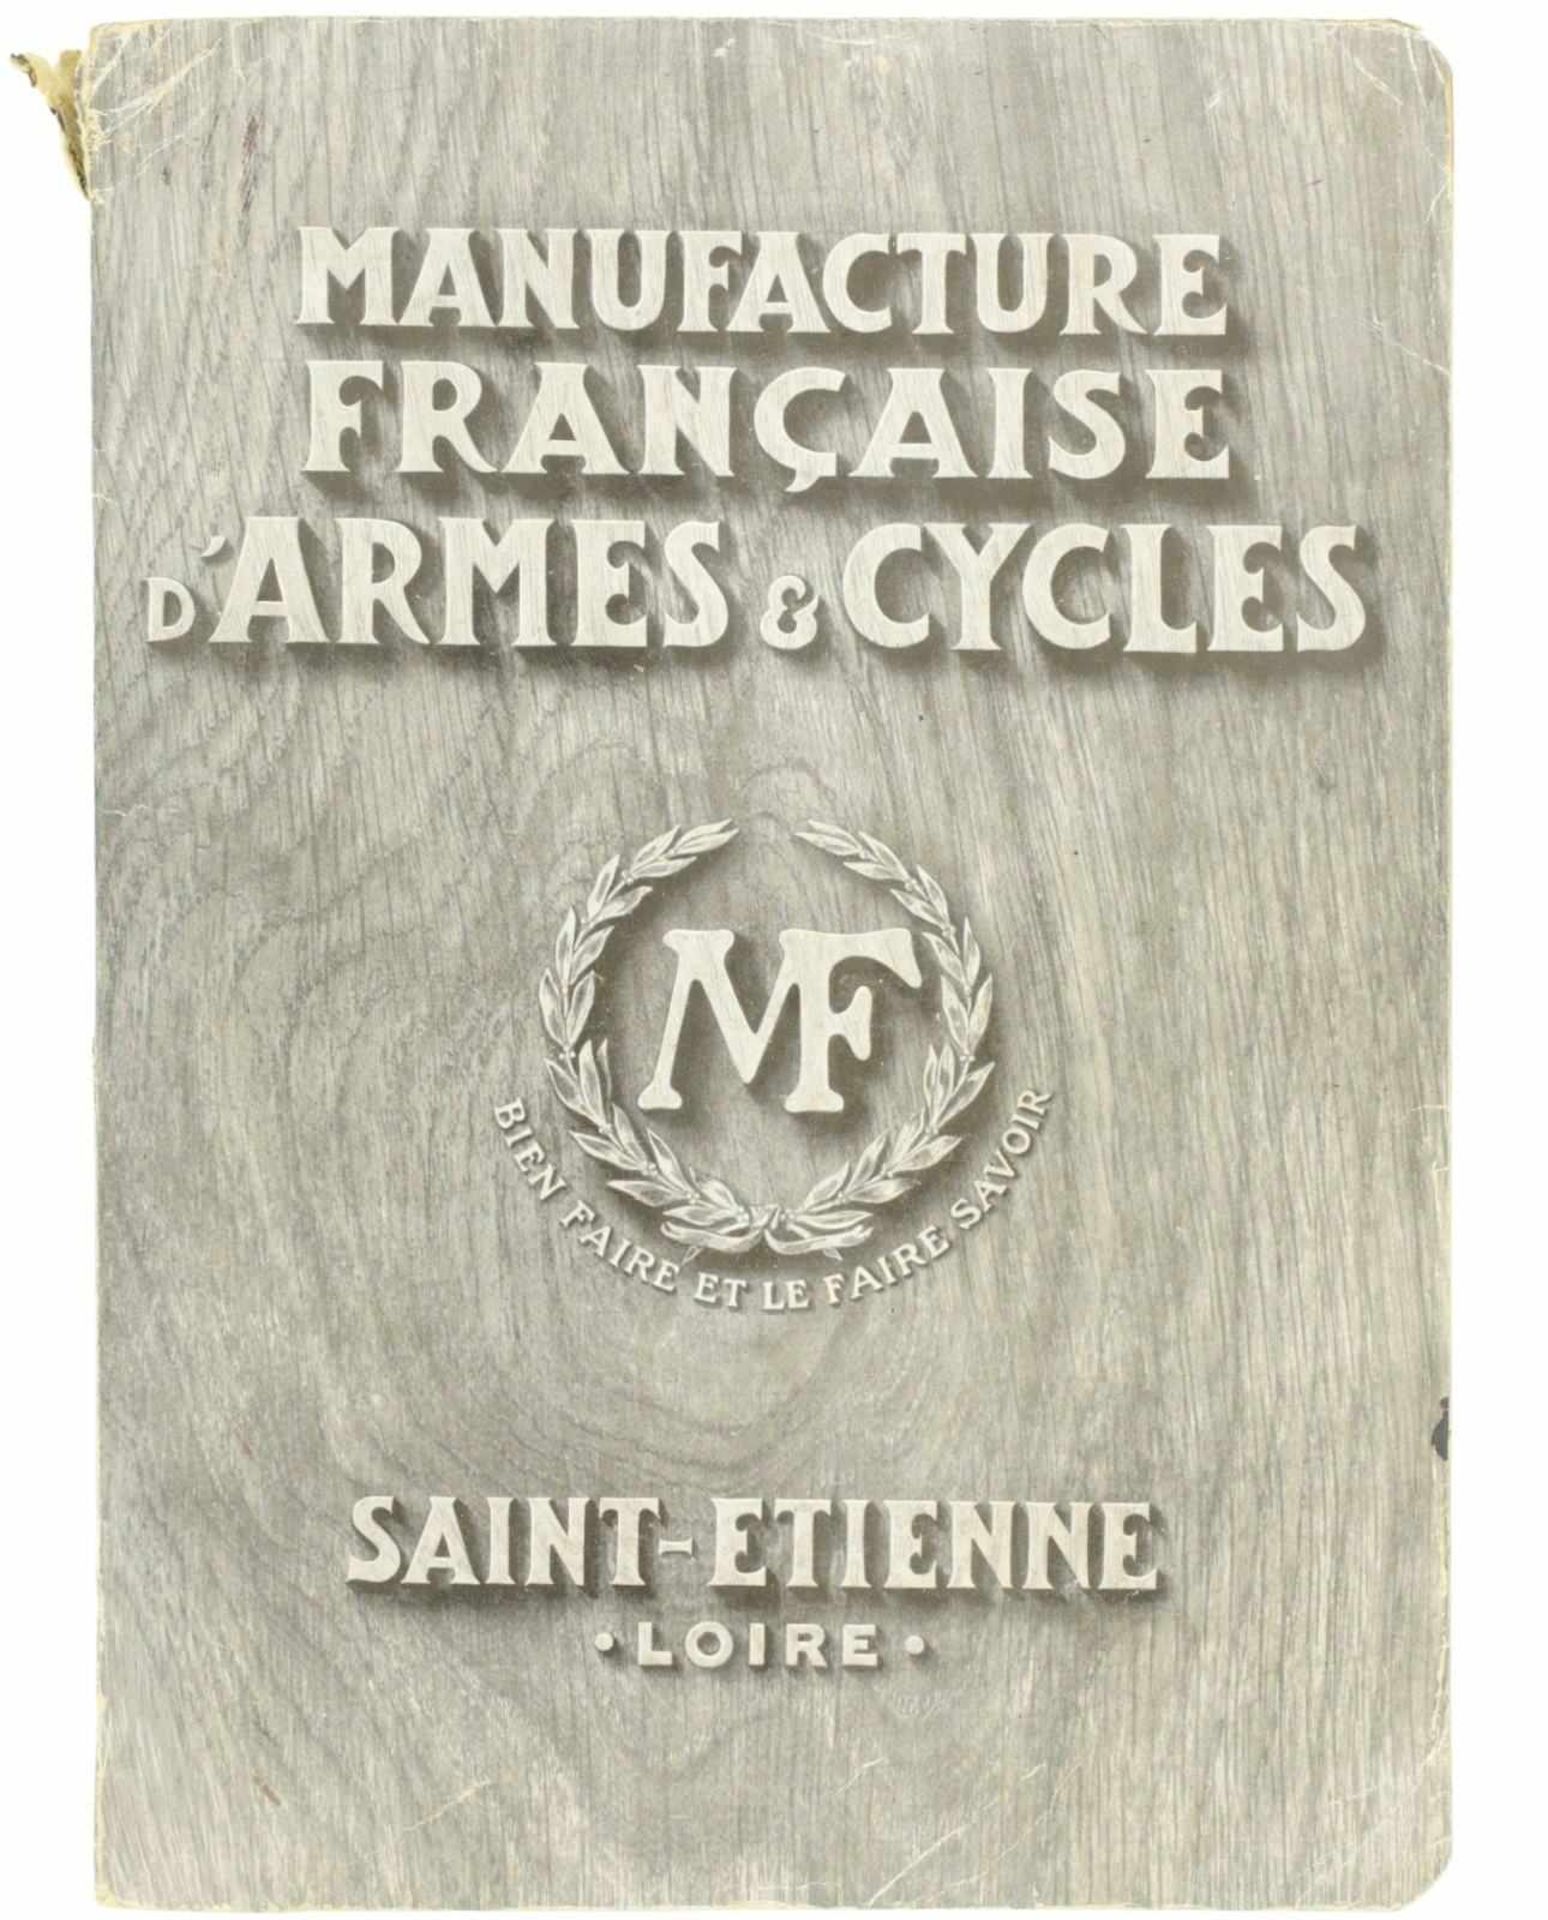 Katalog "Manufacture Francaise d'Armes & Cycles"@ Der aus der Zeit um 1920 stammende Katalog zeigt